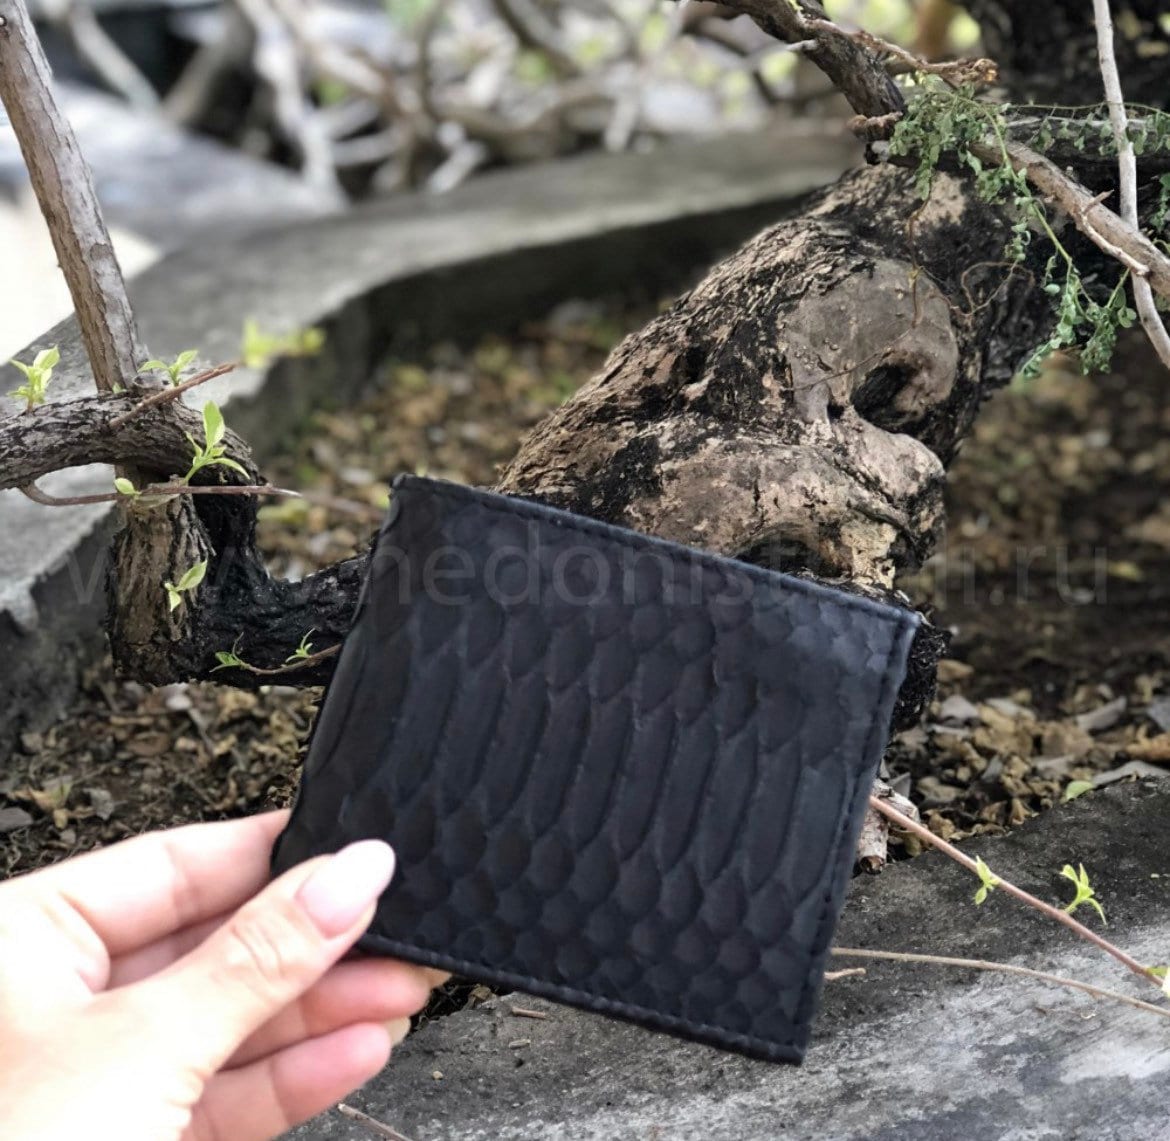 Genuine Python Skin Men Flat Wallet | Exotic Leather Money Wallet | Gift for Him | Money Clips and Wallet | Black Portmone Handmade